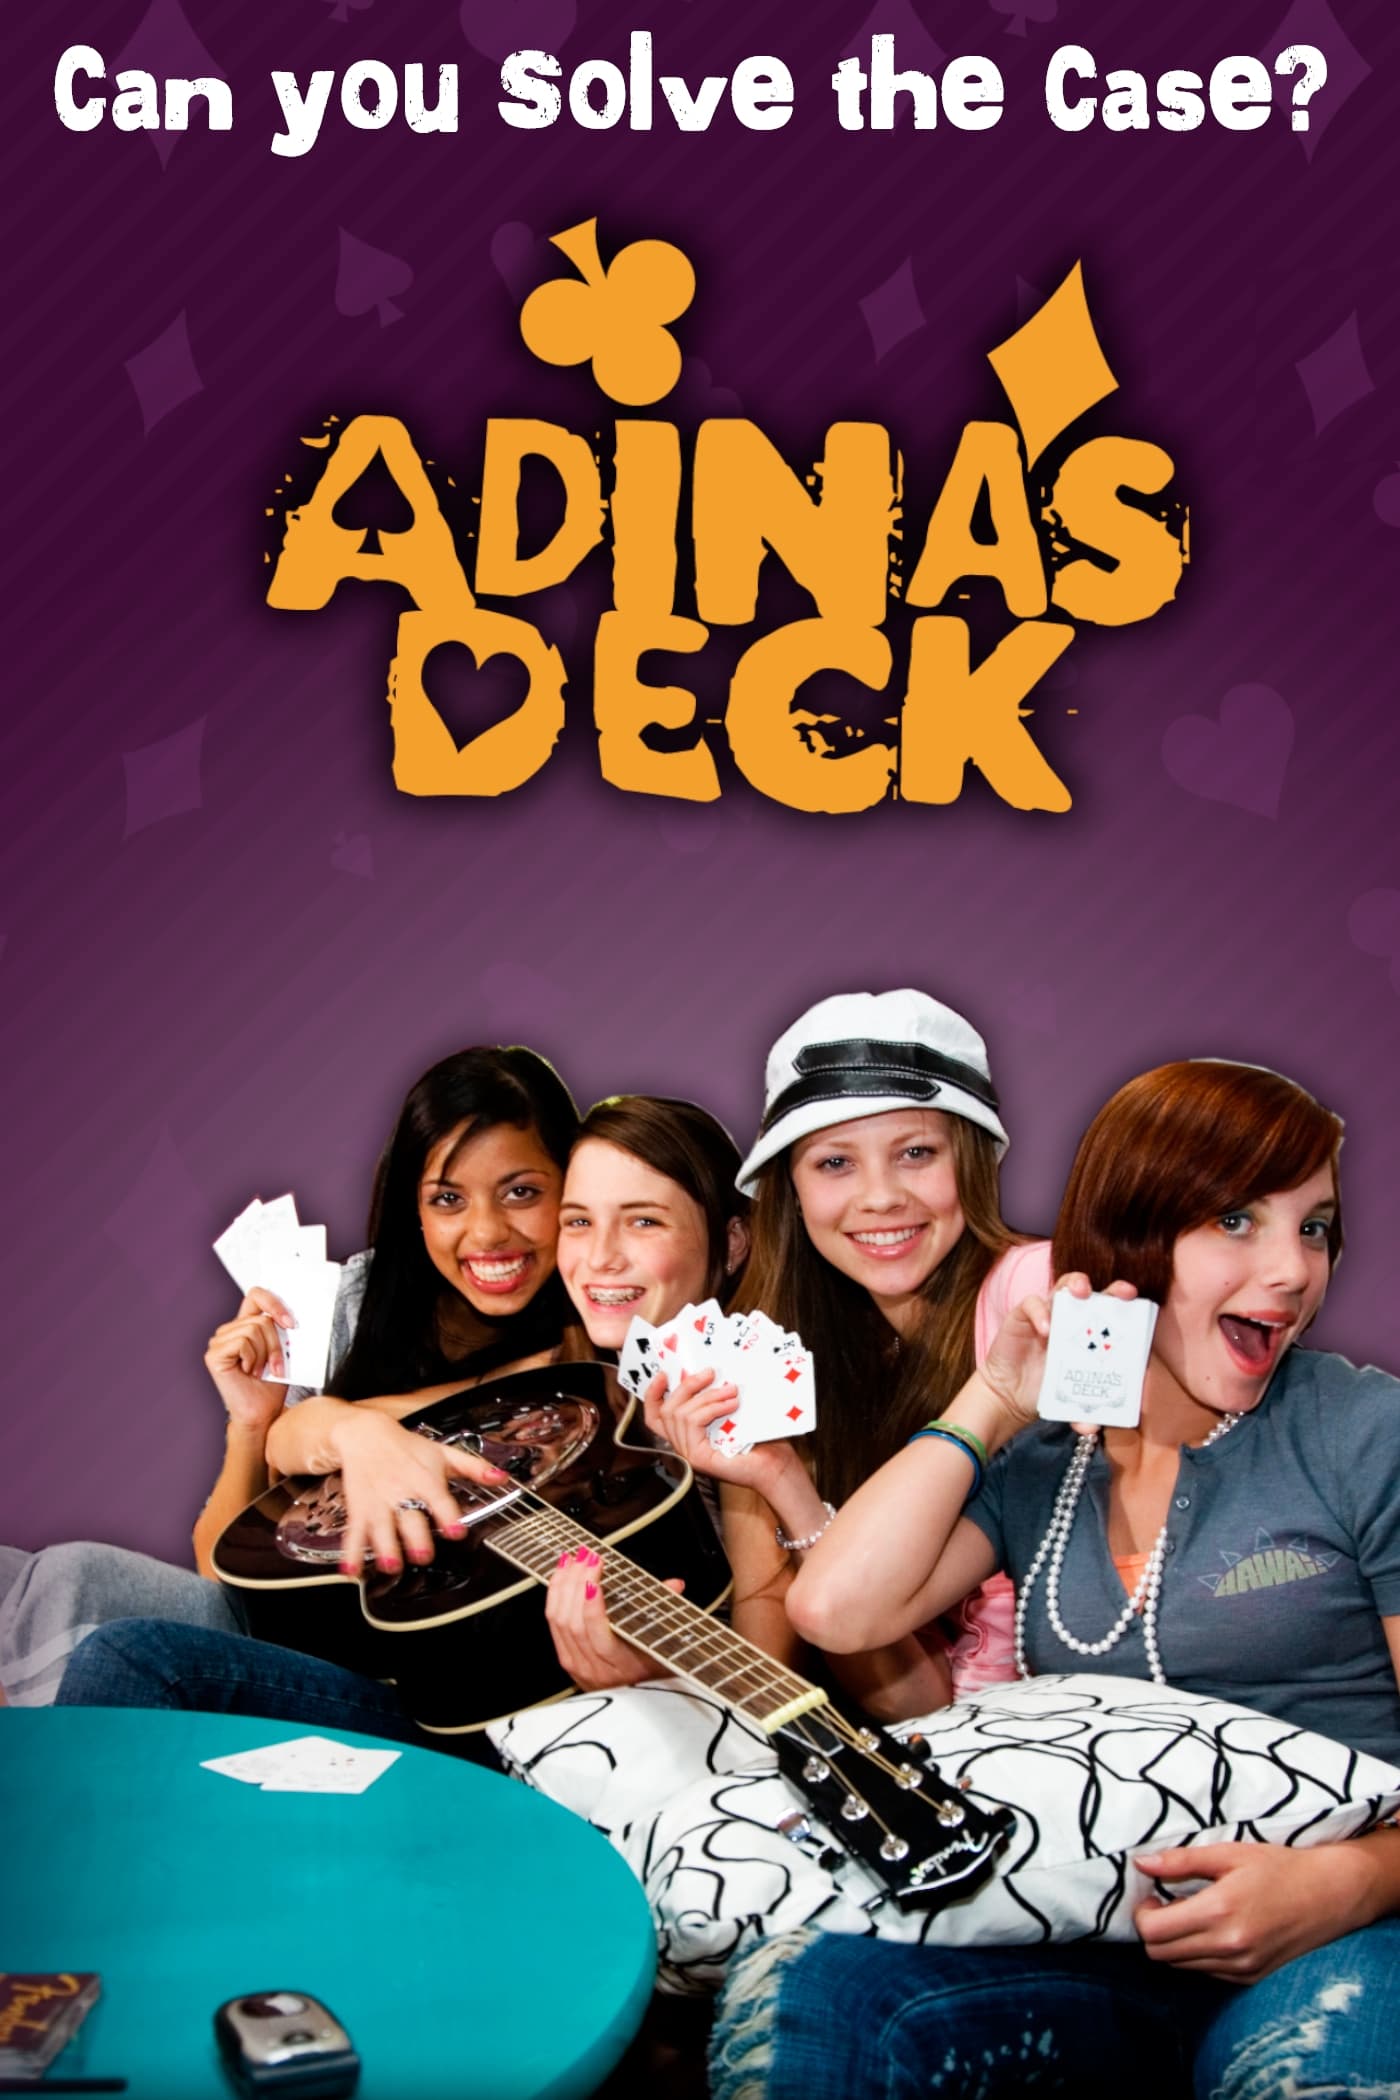 Adina's Deck